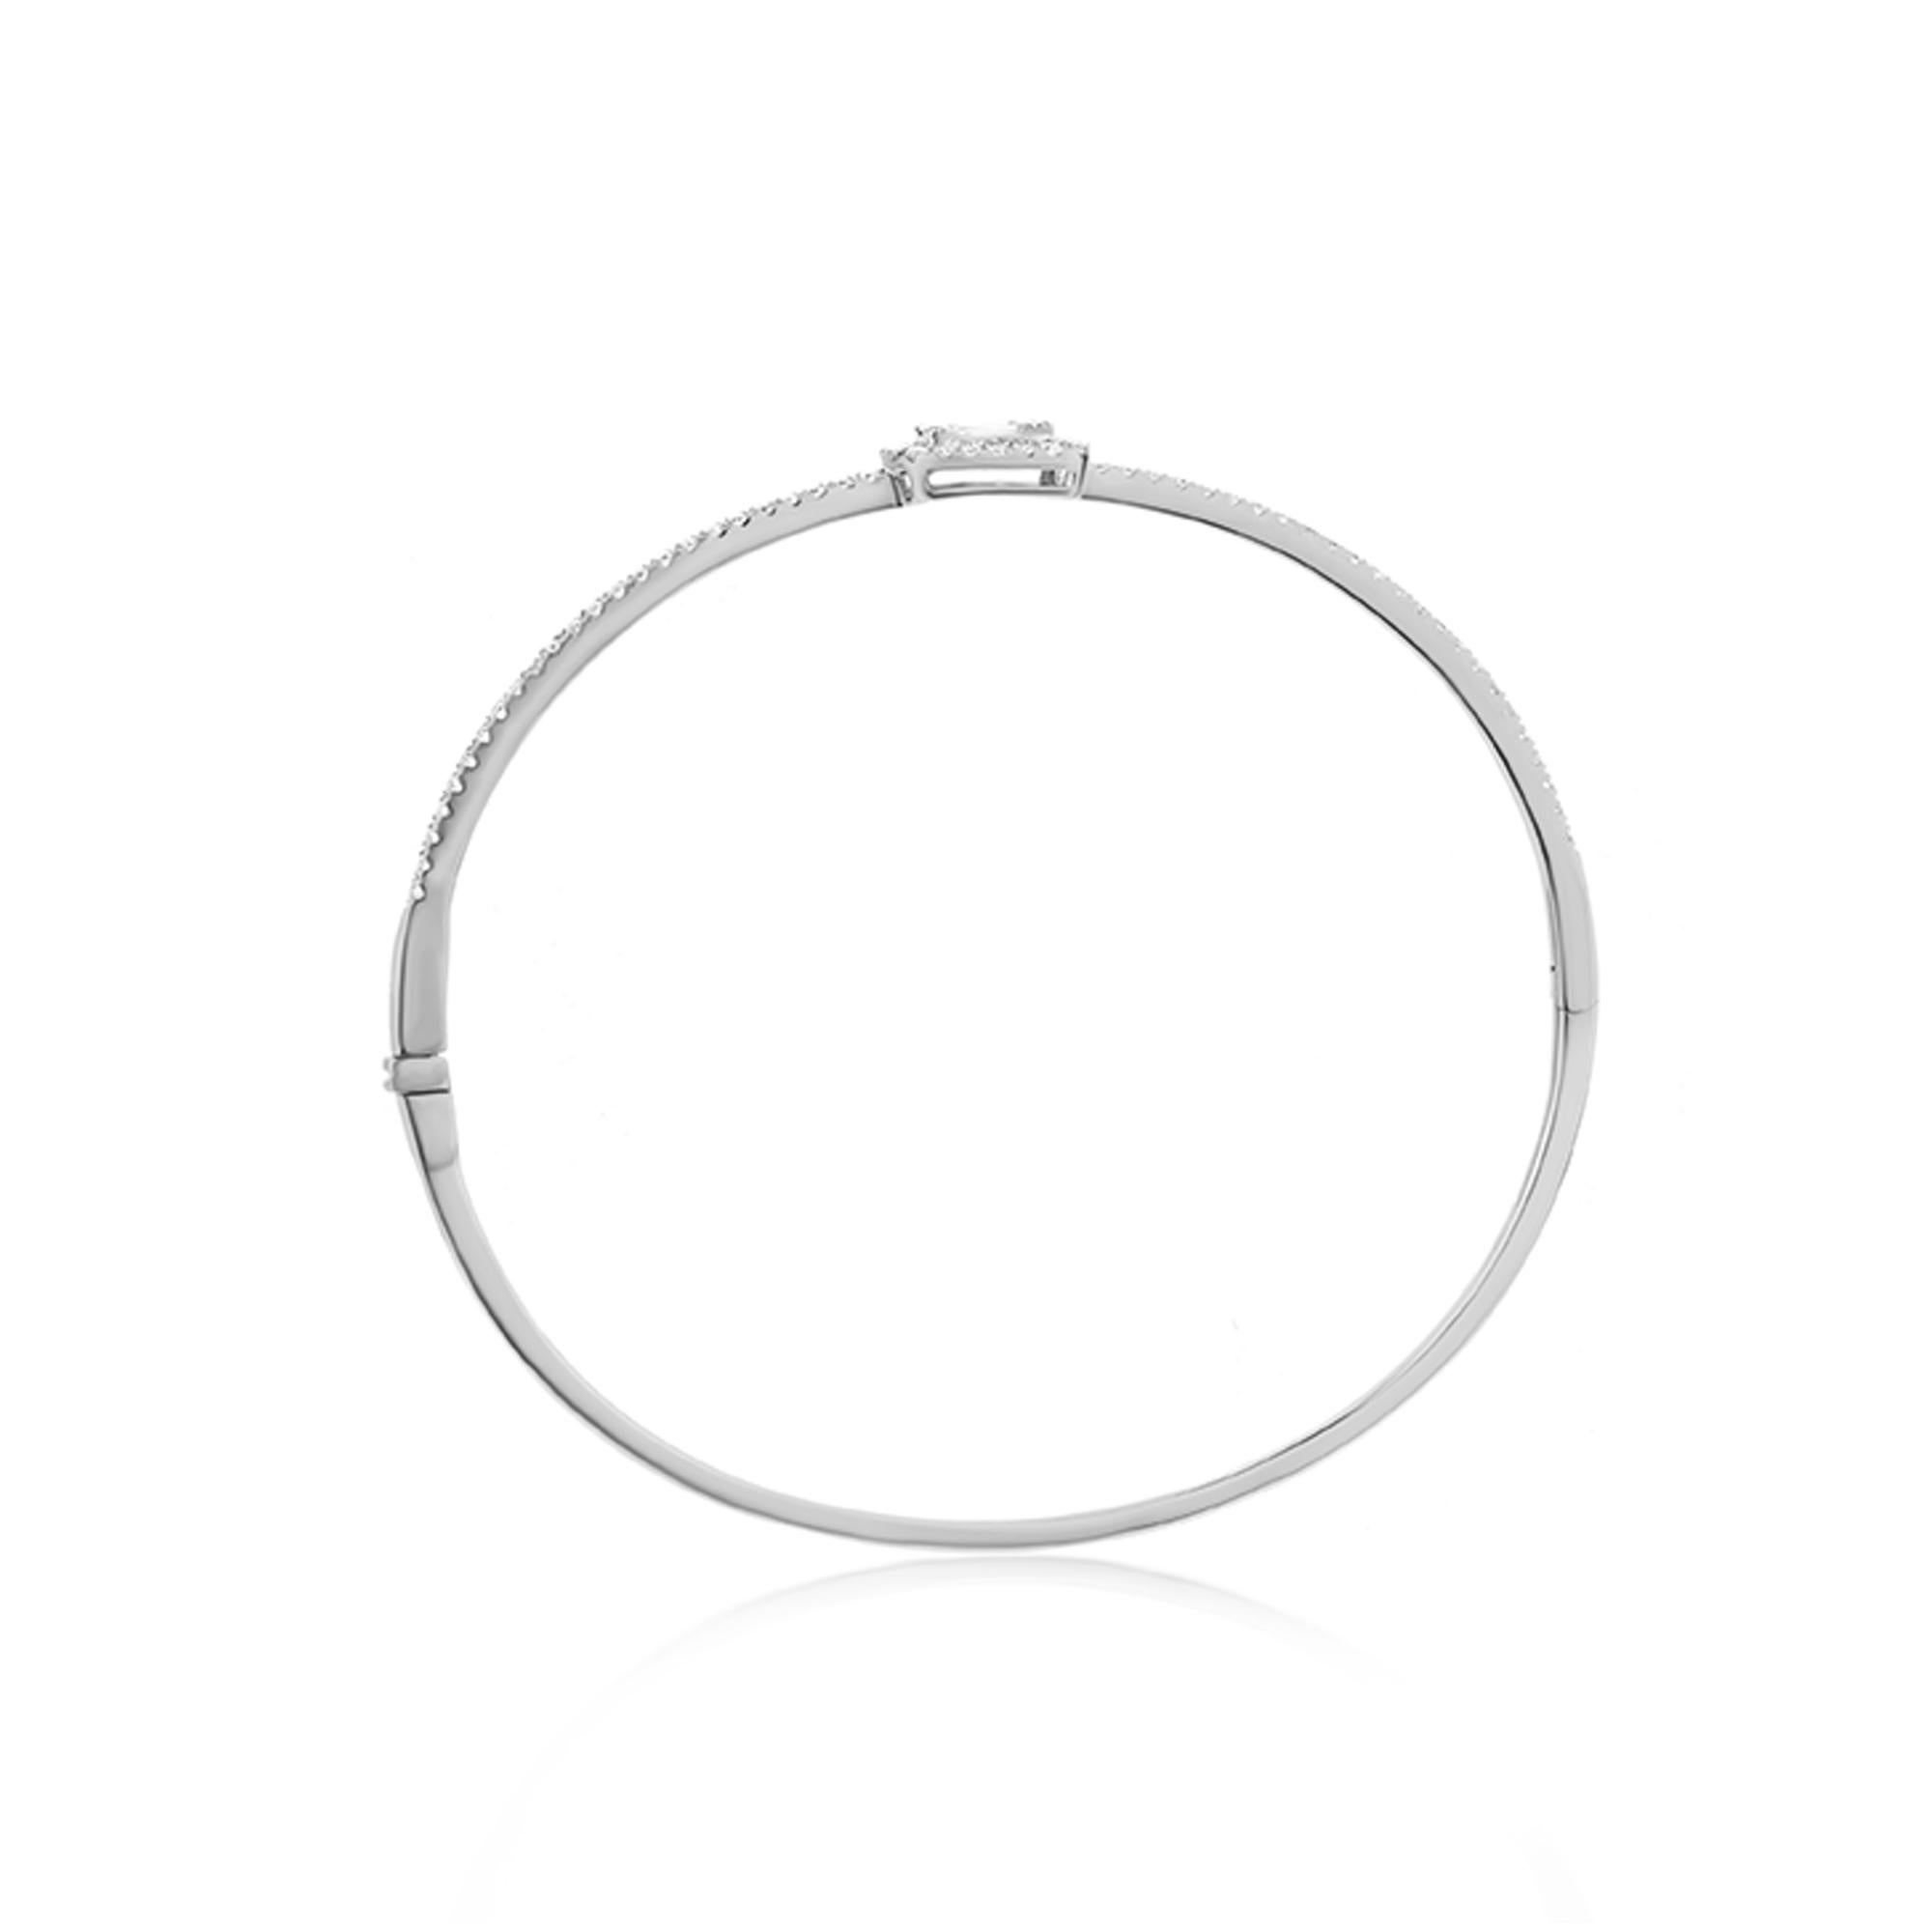 Contemporary Luxle 0.66cttw. Diamond Bangle Bracelet in 18k White Gold For Sale